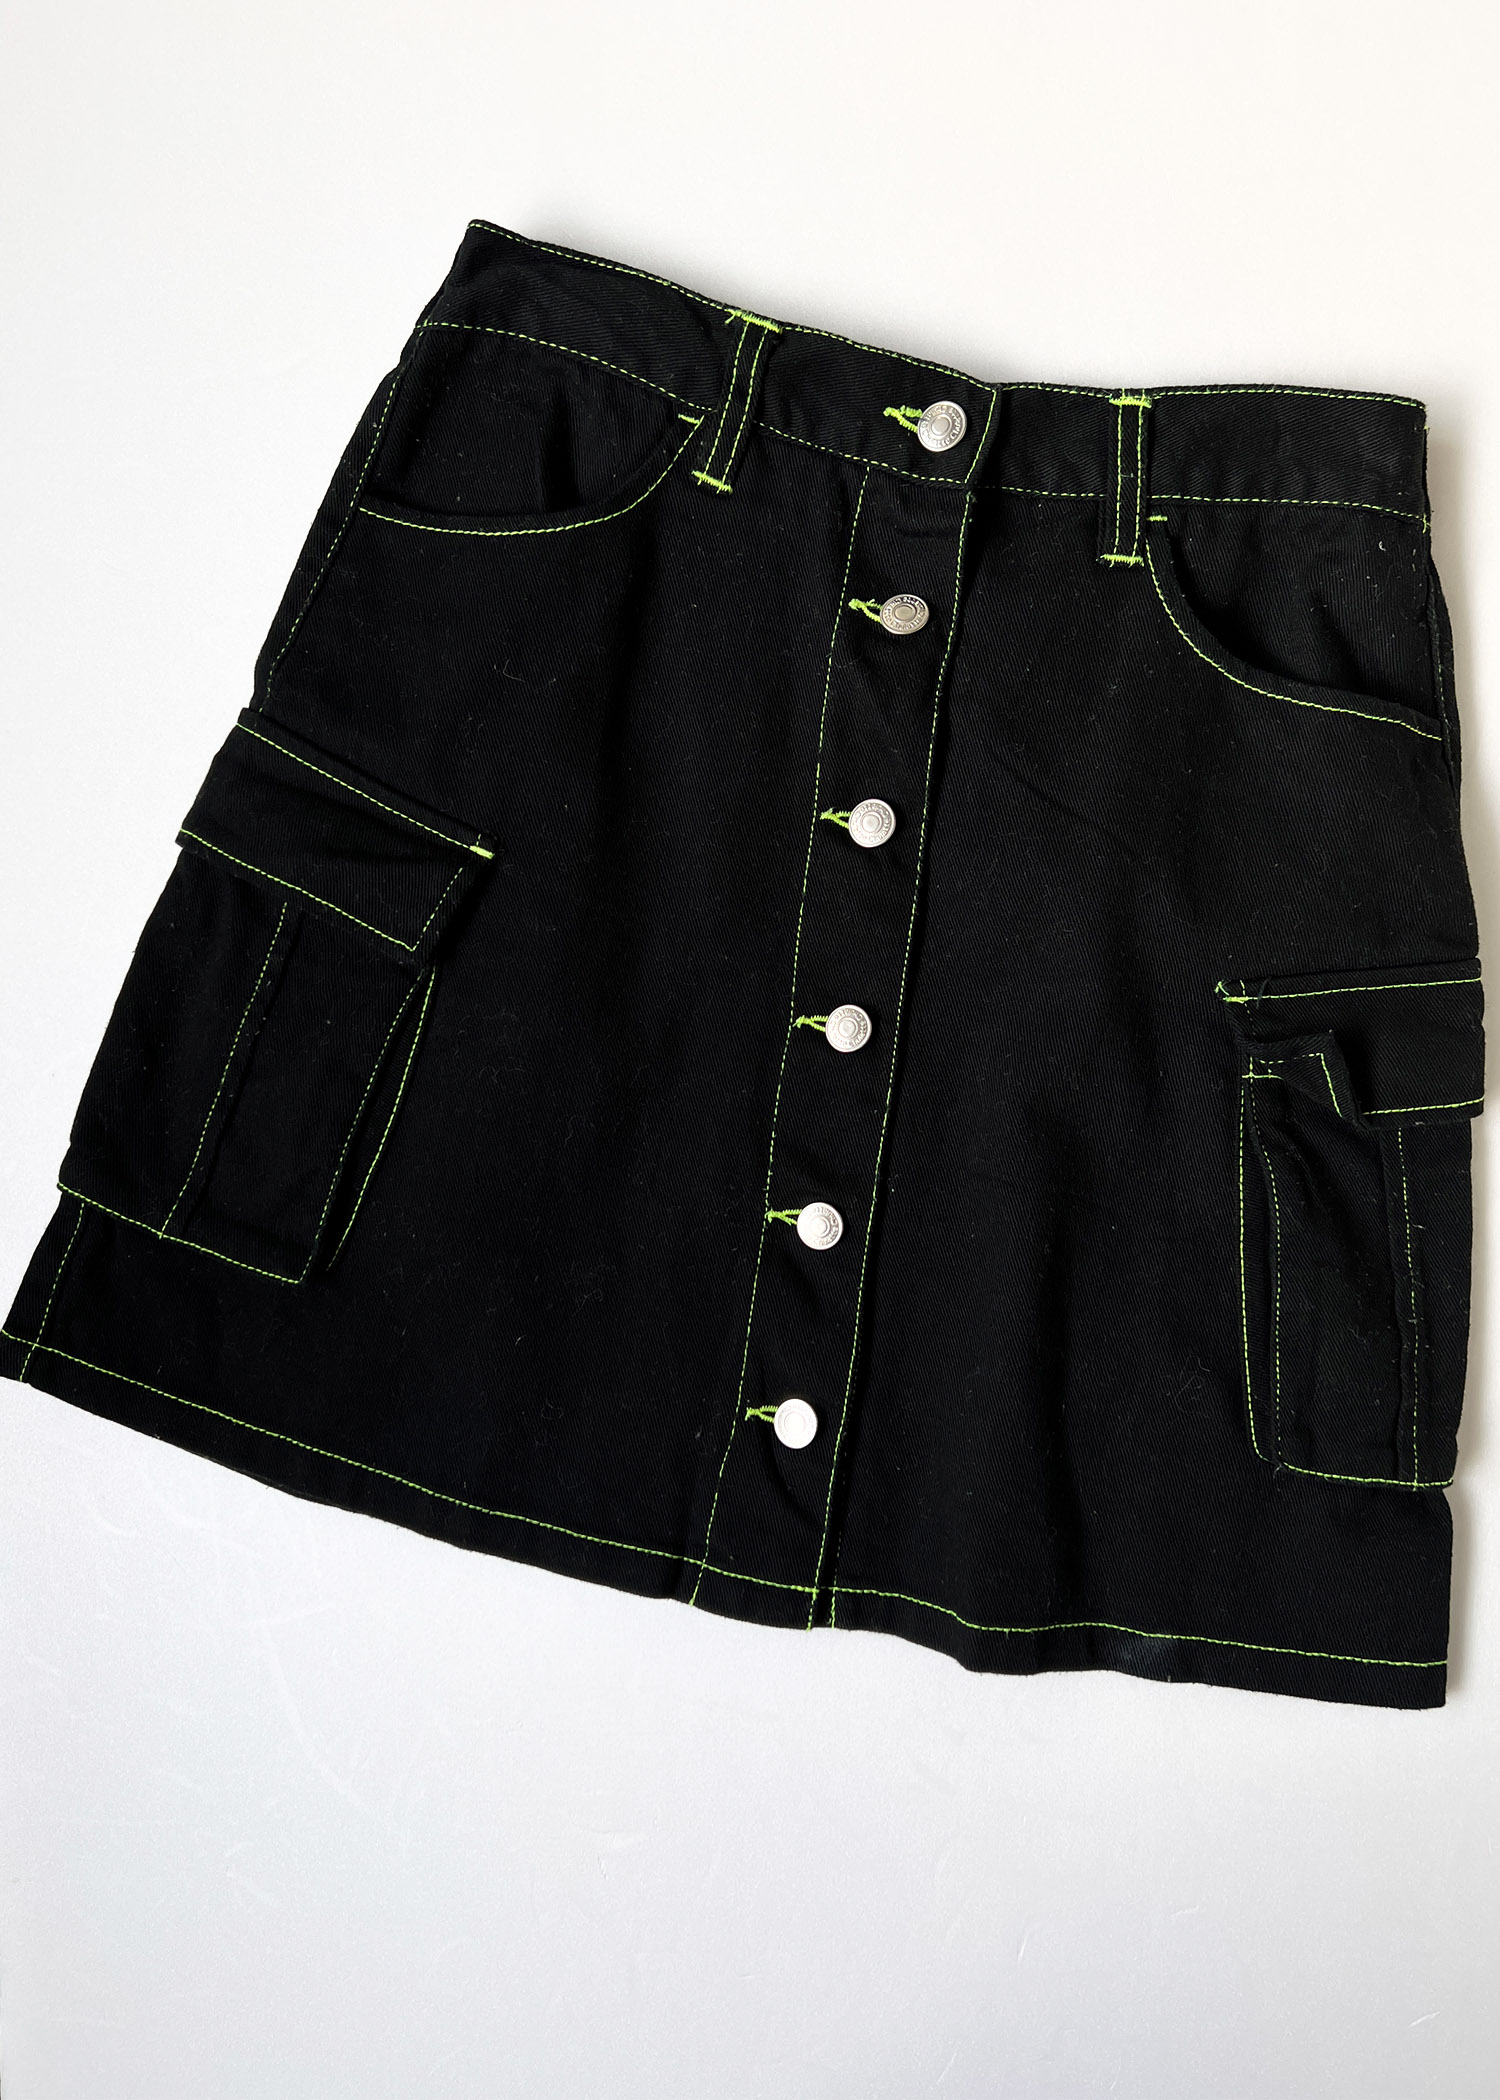 select vintage : punky skirts